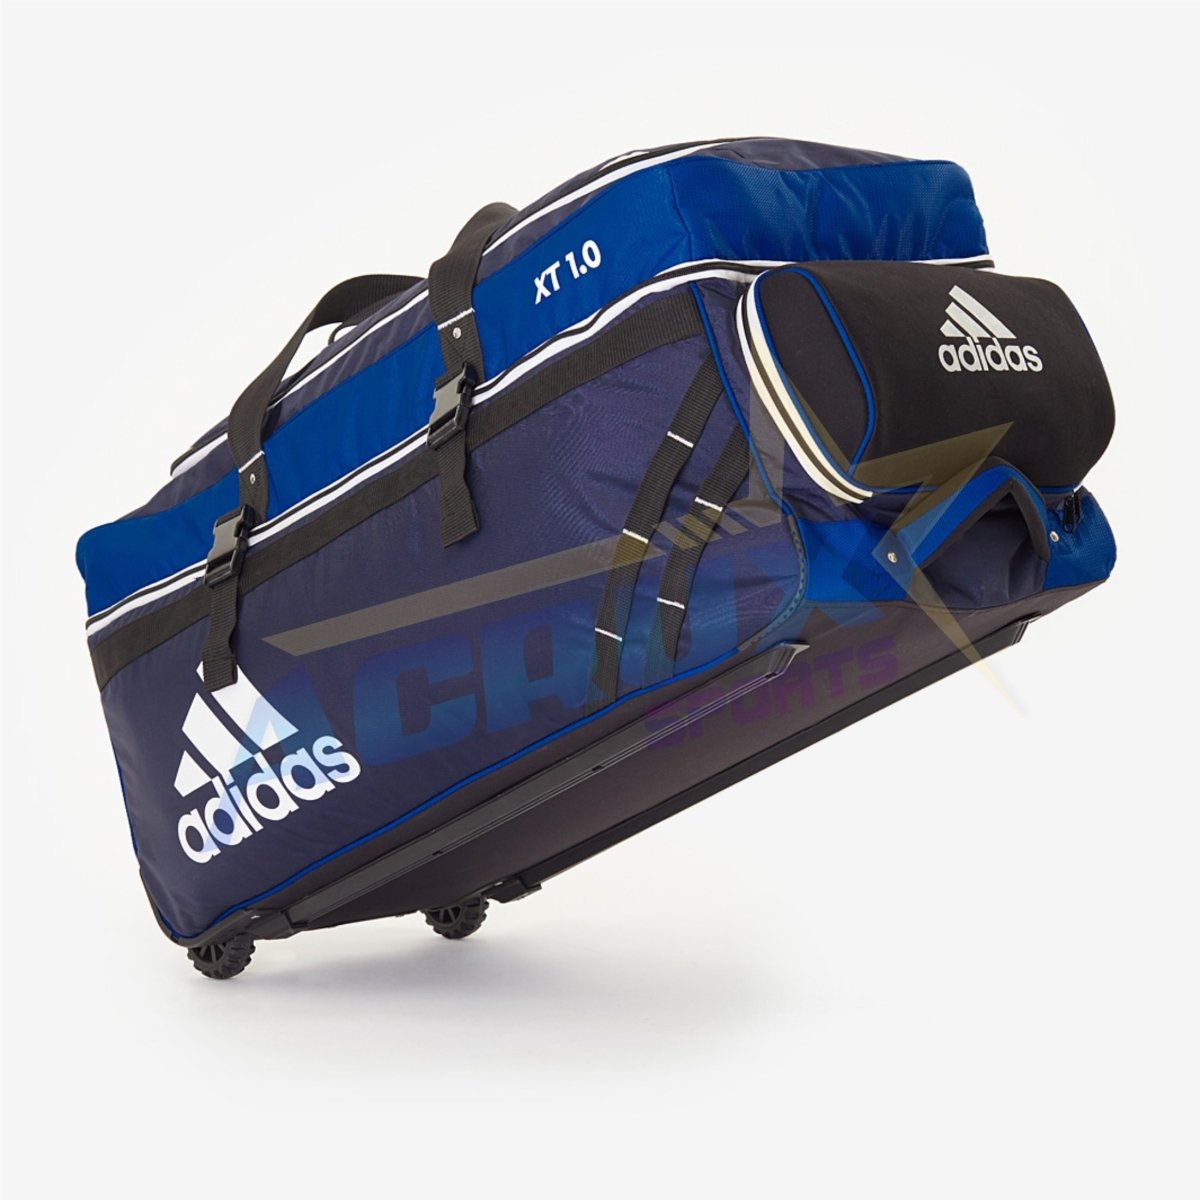 Adidas XT 1.0 Cricket Wheelie Kit Bag.